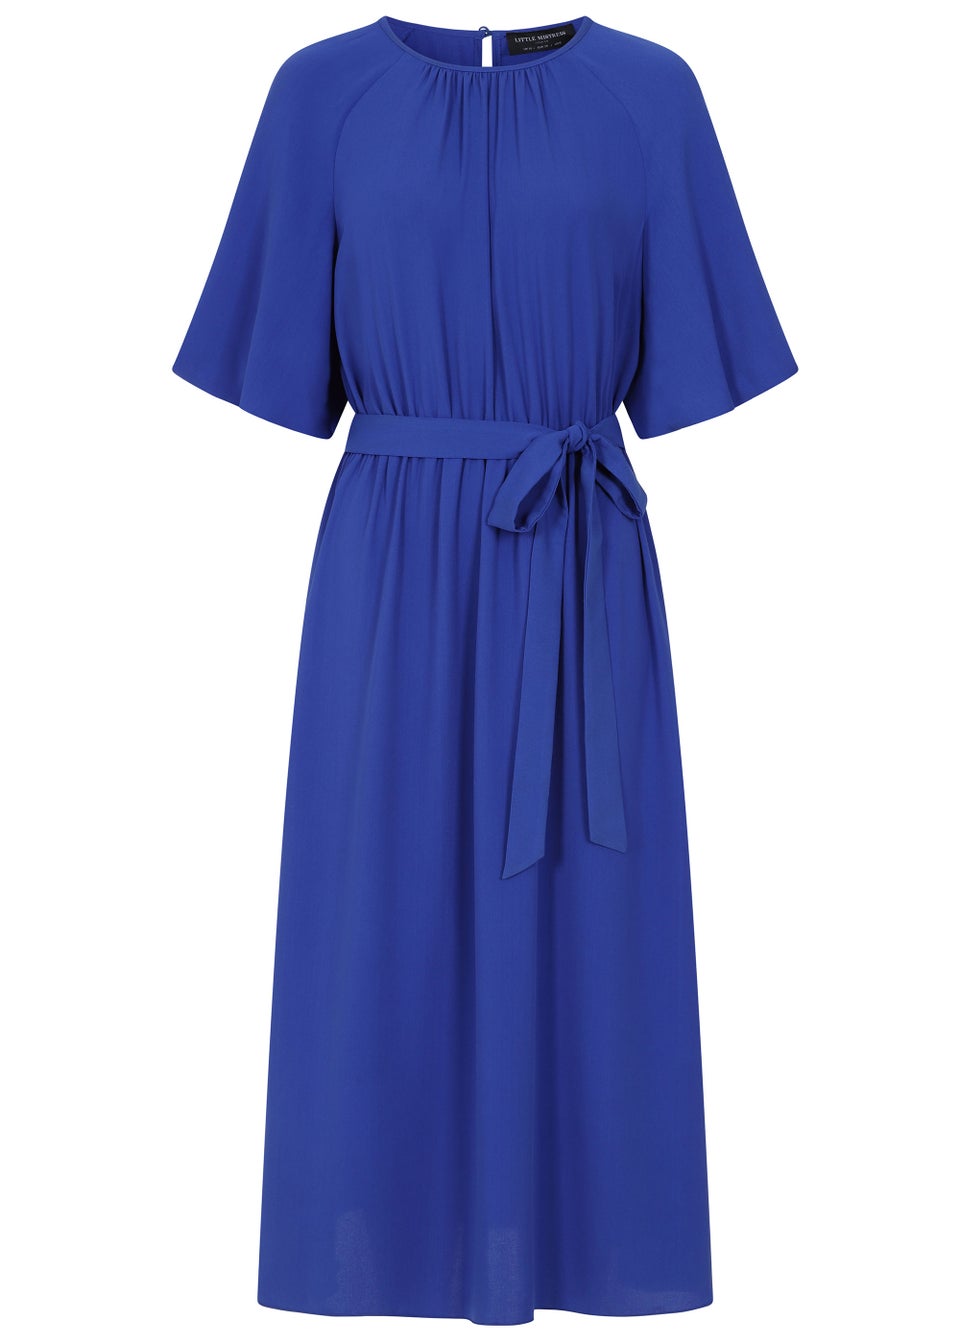 Little Mistress by Vogue Williams Royal Blue Woven Midi Dress - Matalan